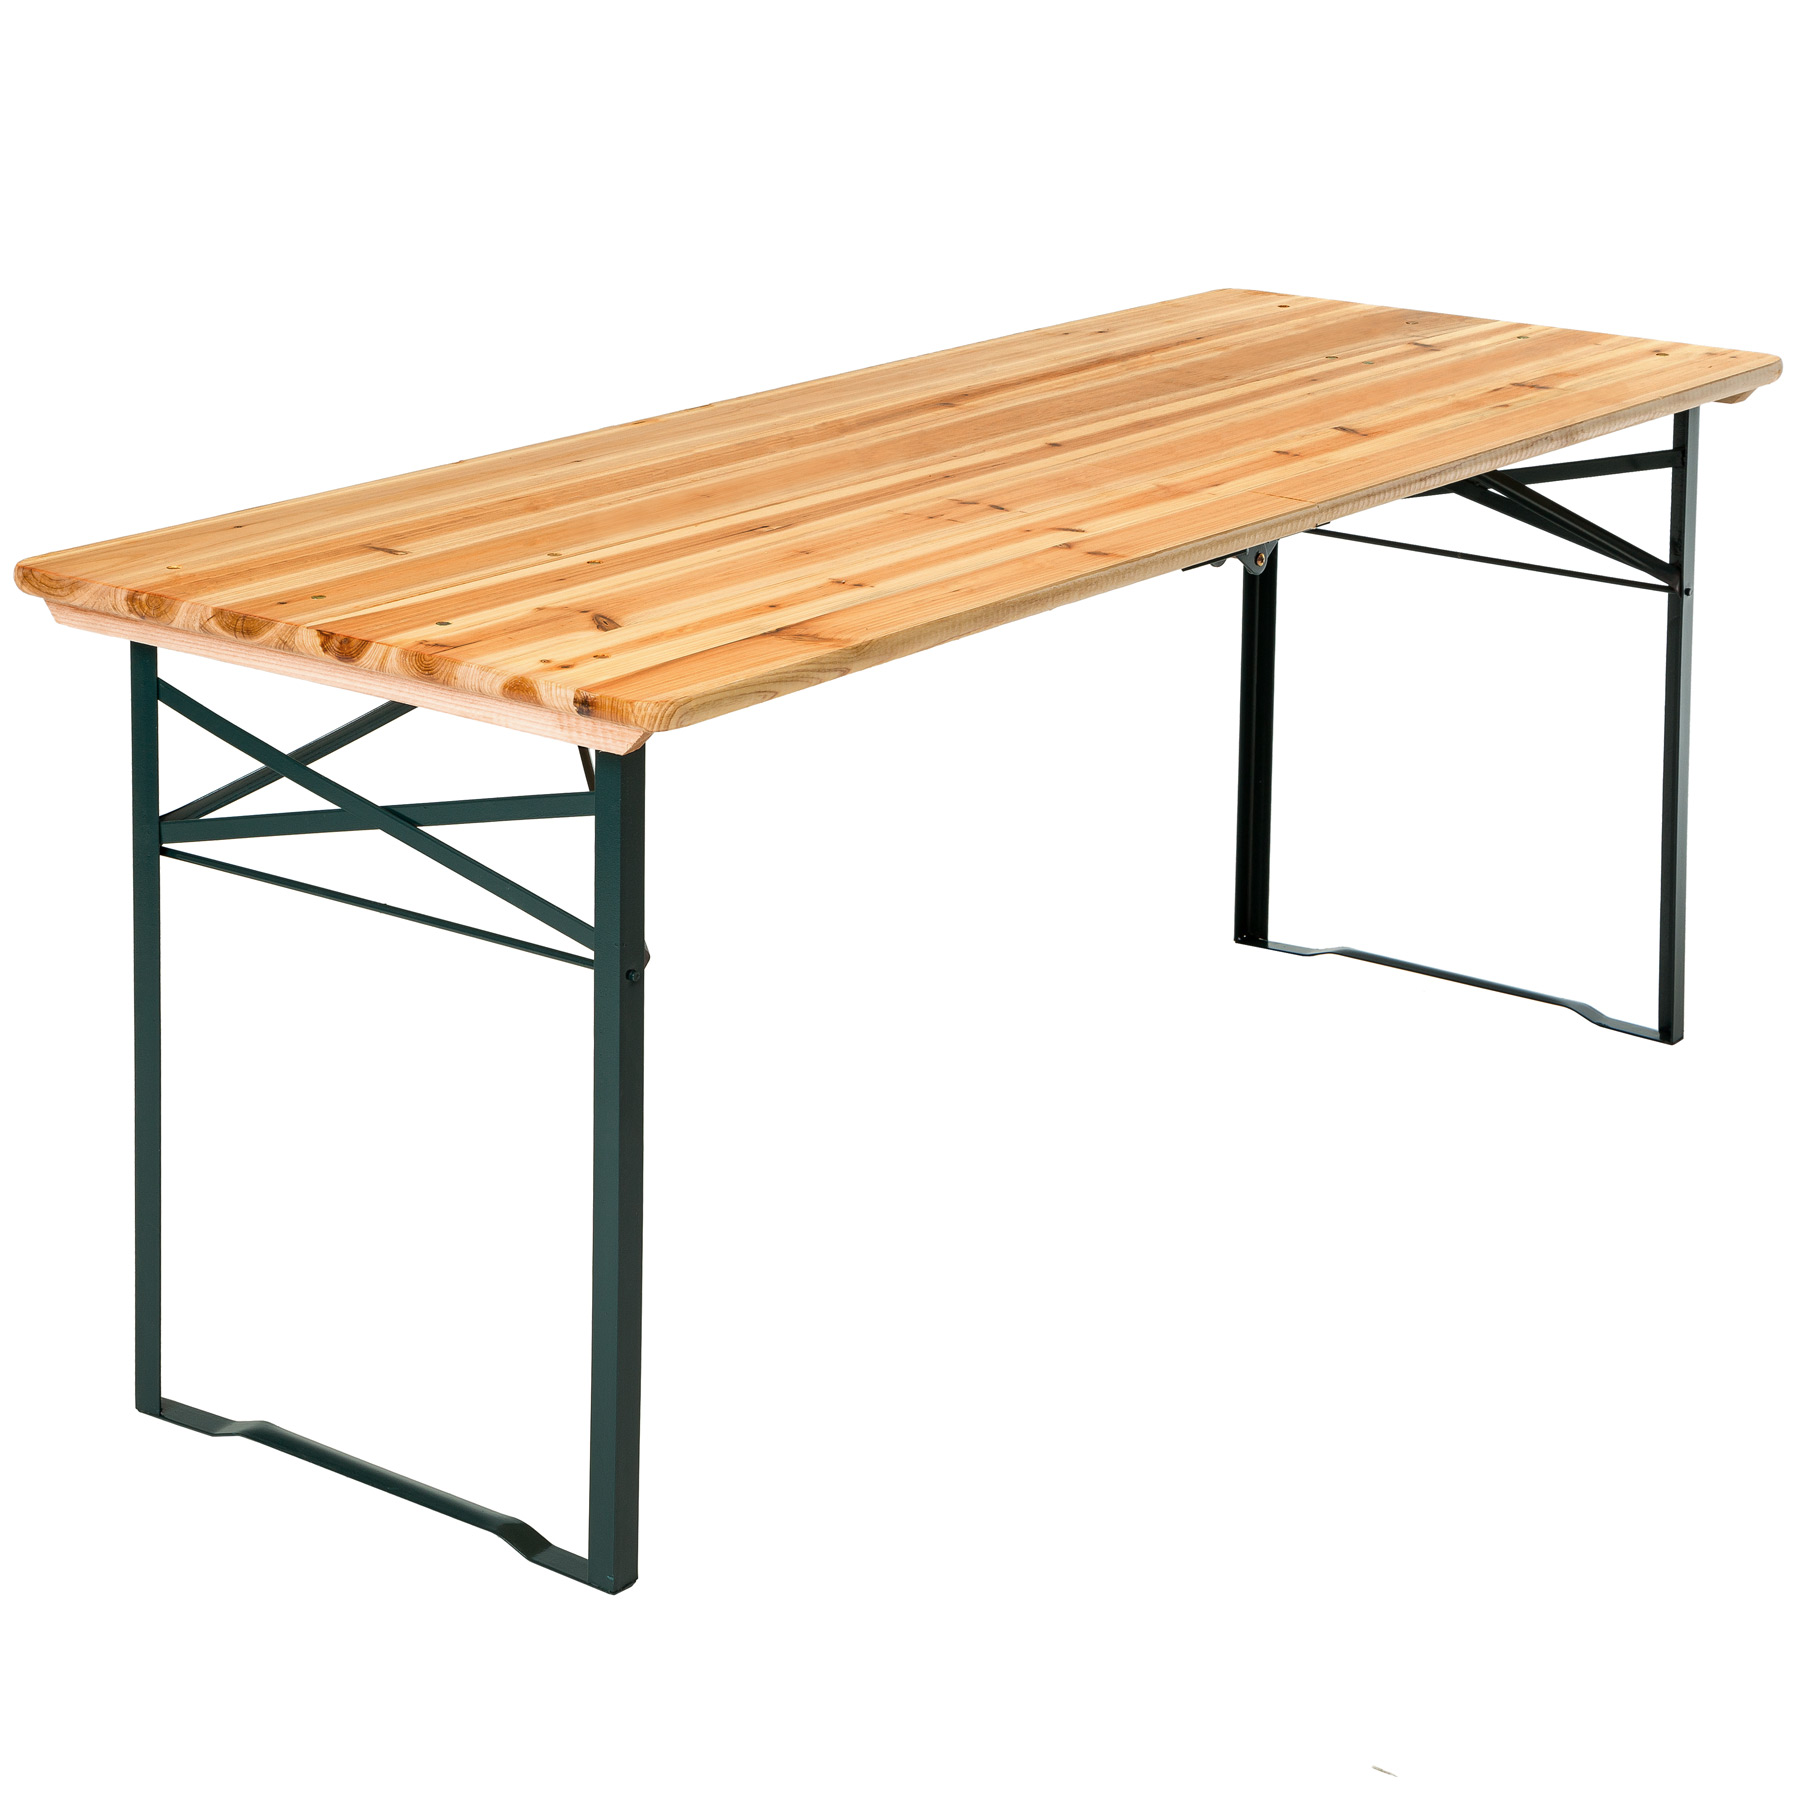 Садовый стол, складной стол для сада 180х75х72 см, GOGARDEN